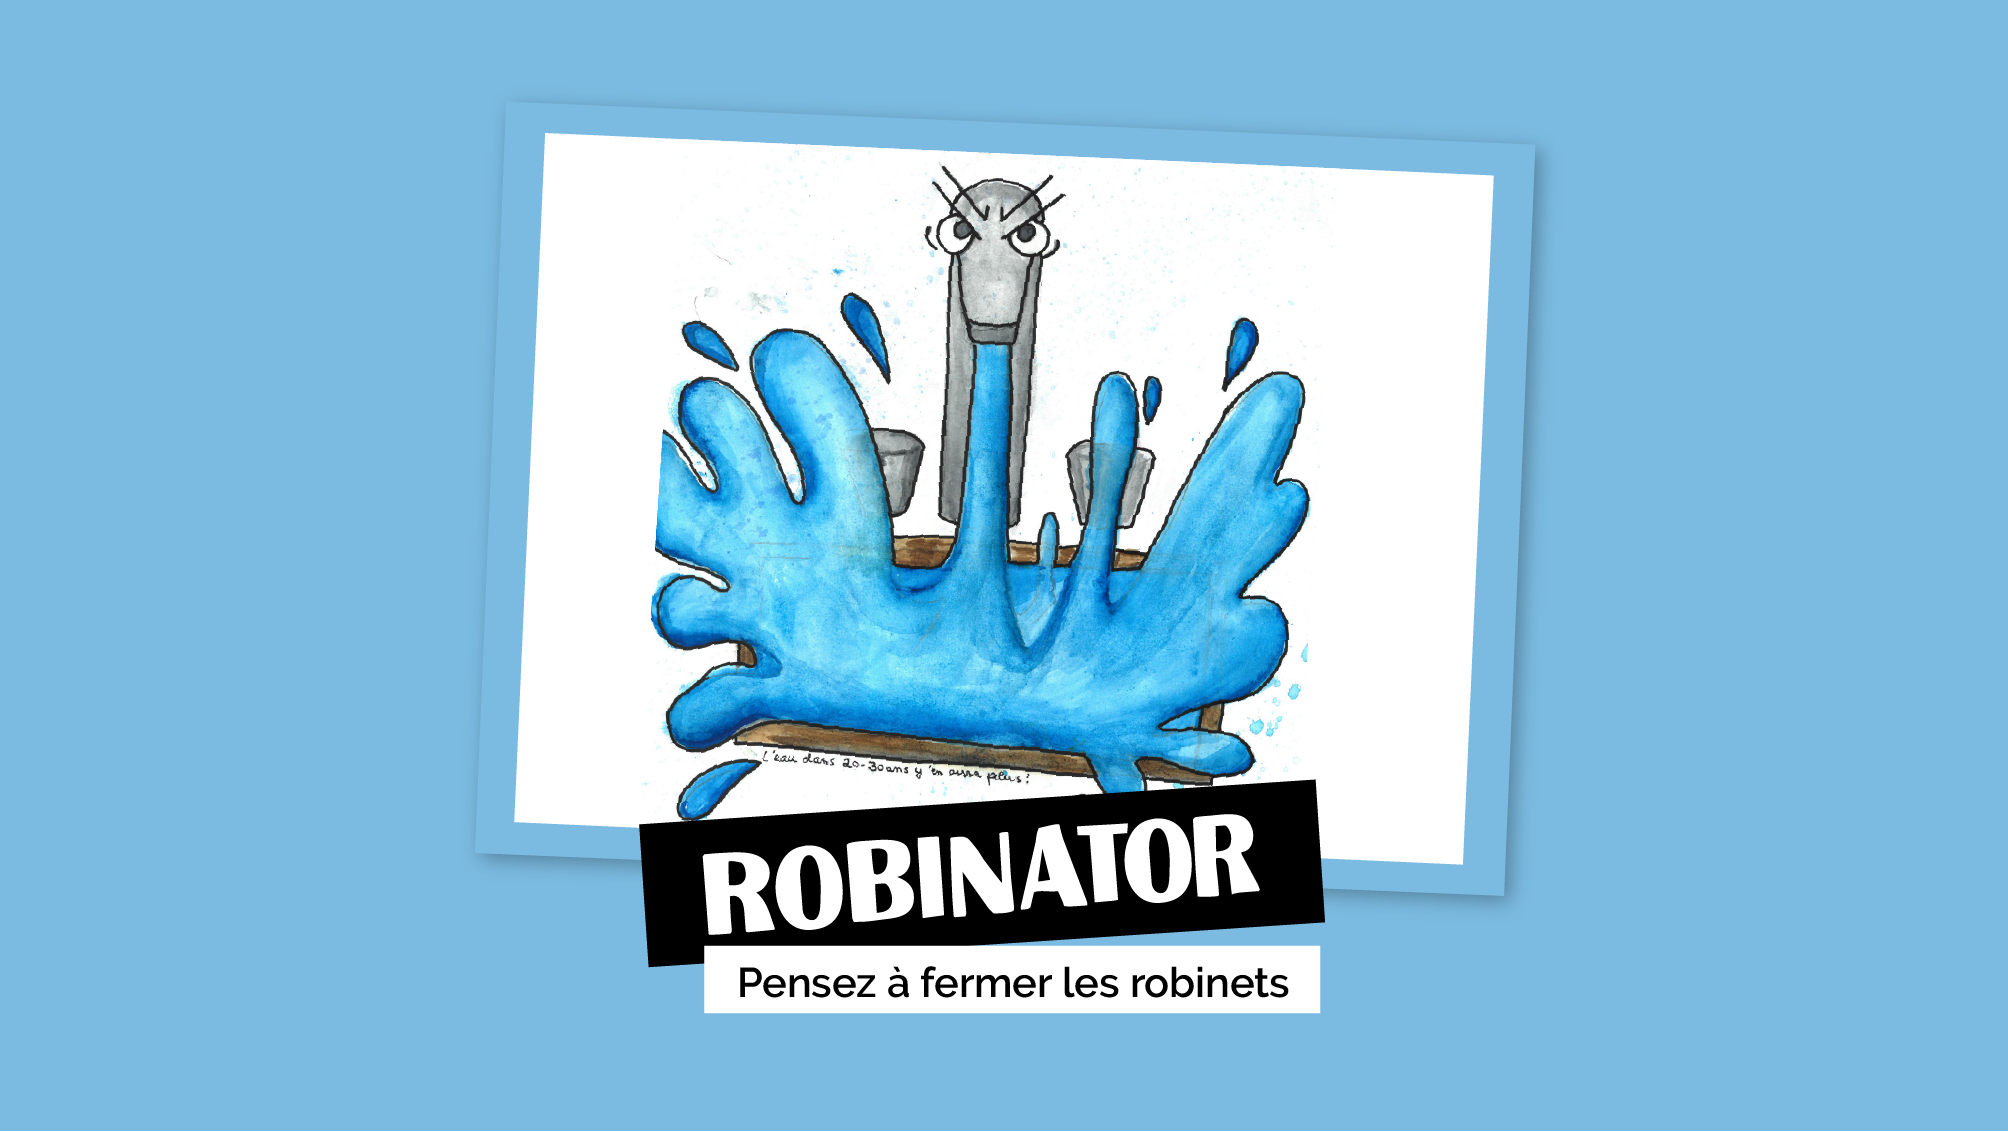 Robinator - Pensez à fermer les robinets